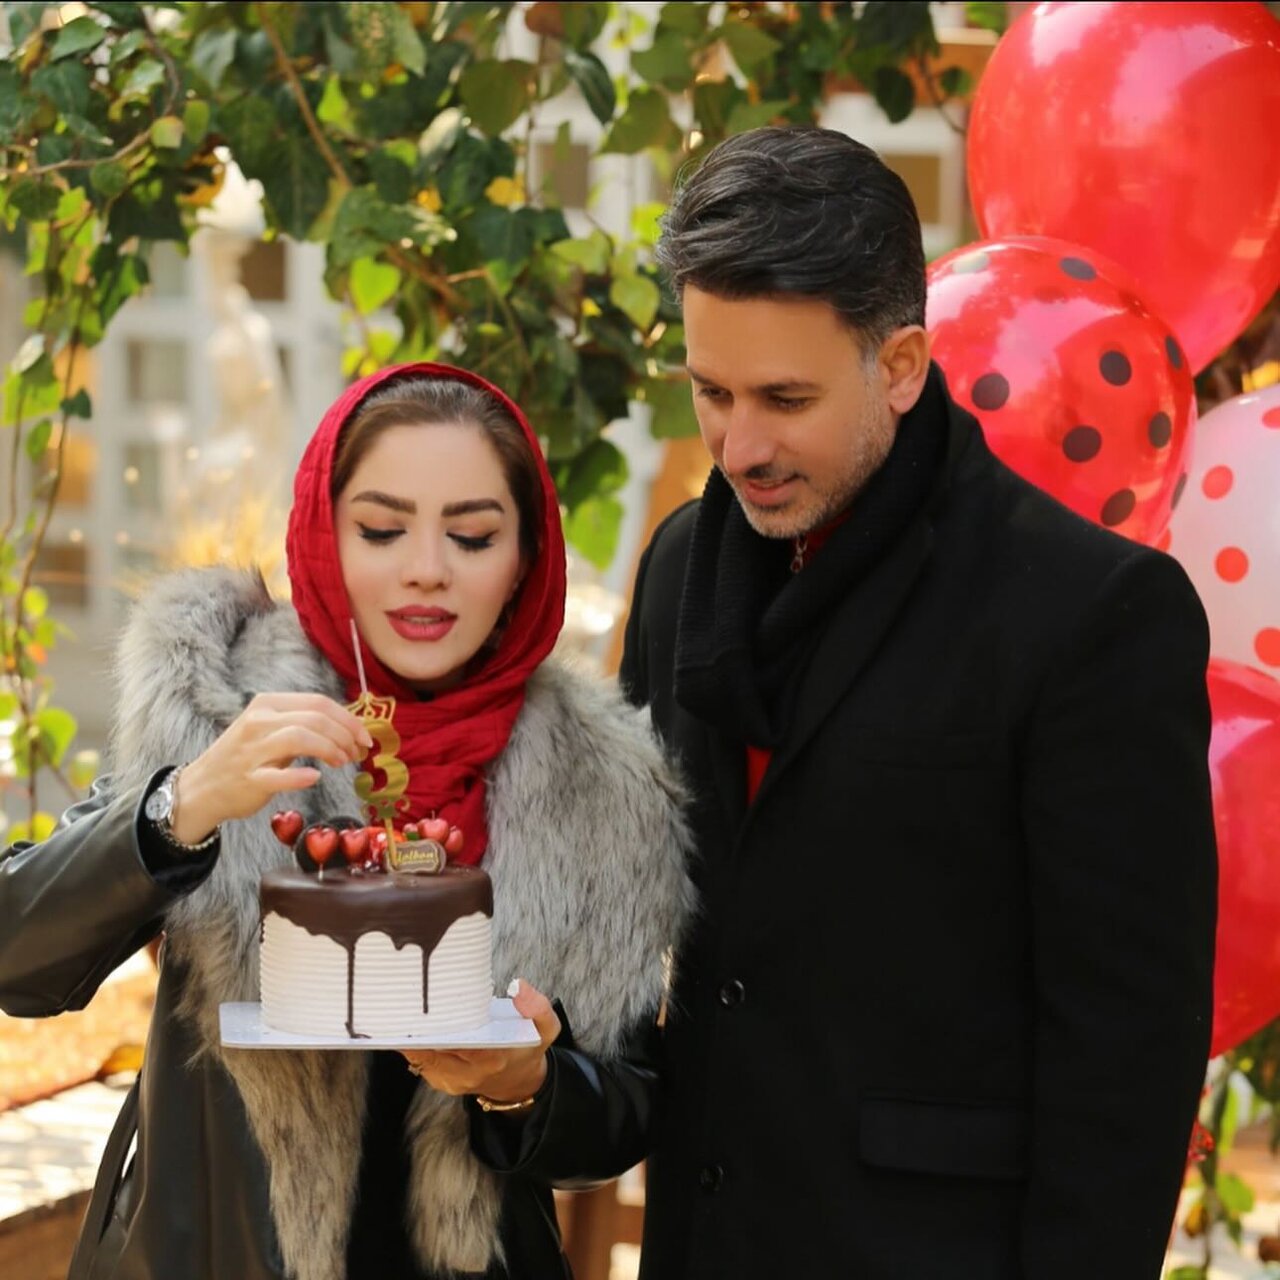 تصاویر عاشقانه از سالگرد ازدواج مجری تلویزیون